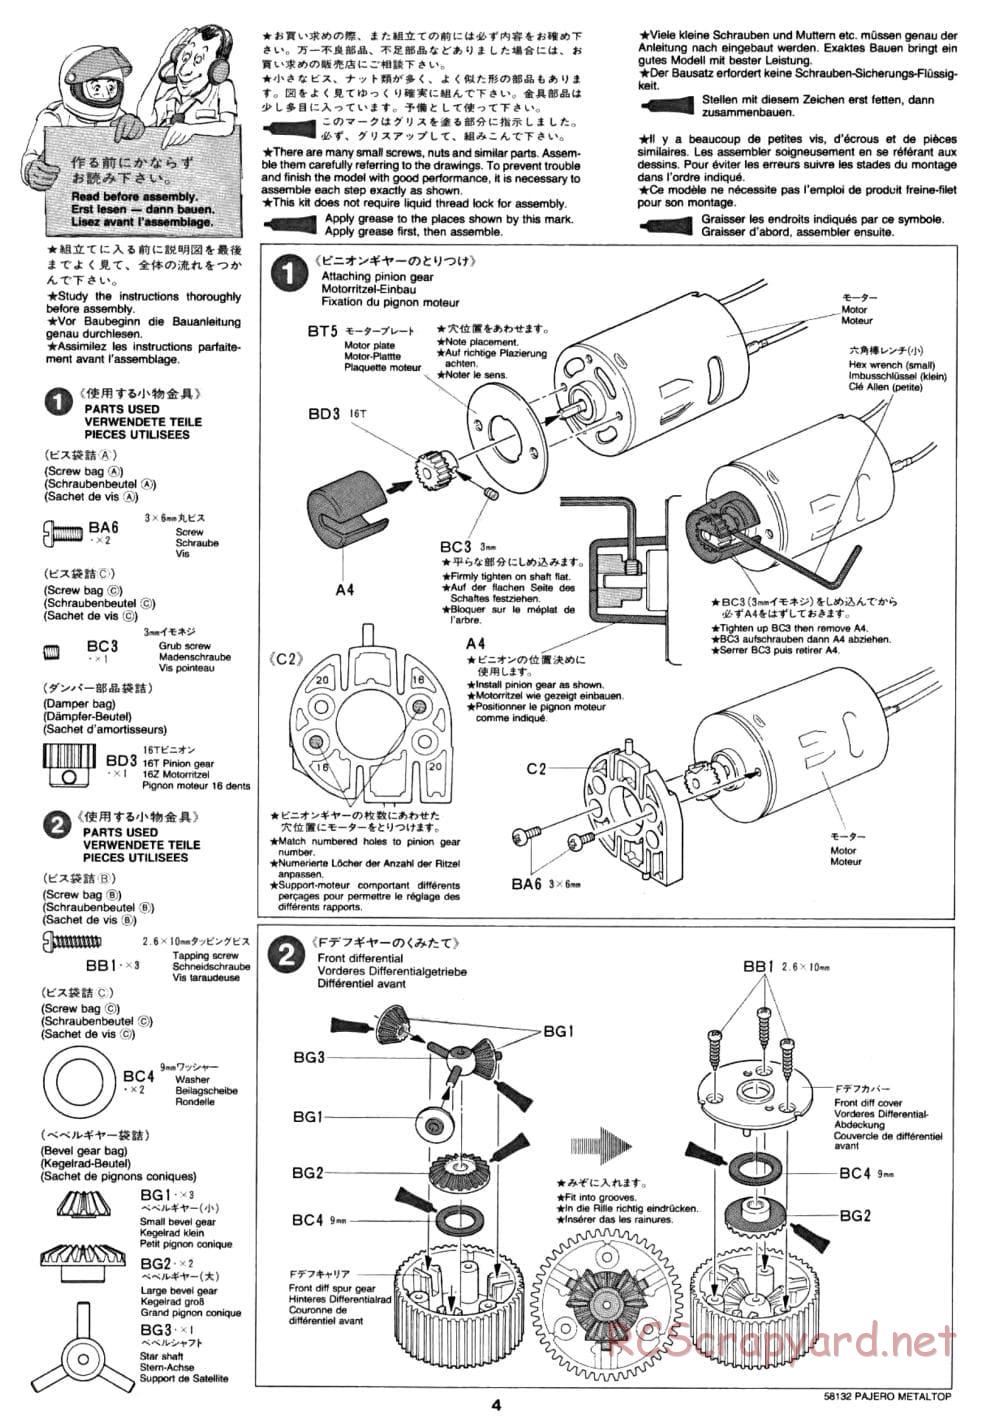 Tamiya - Mitsubishi Pajero Metaltop Wide - CC-01 Chassis - Manual - Page 4